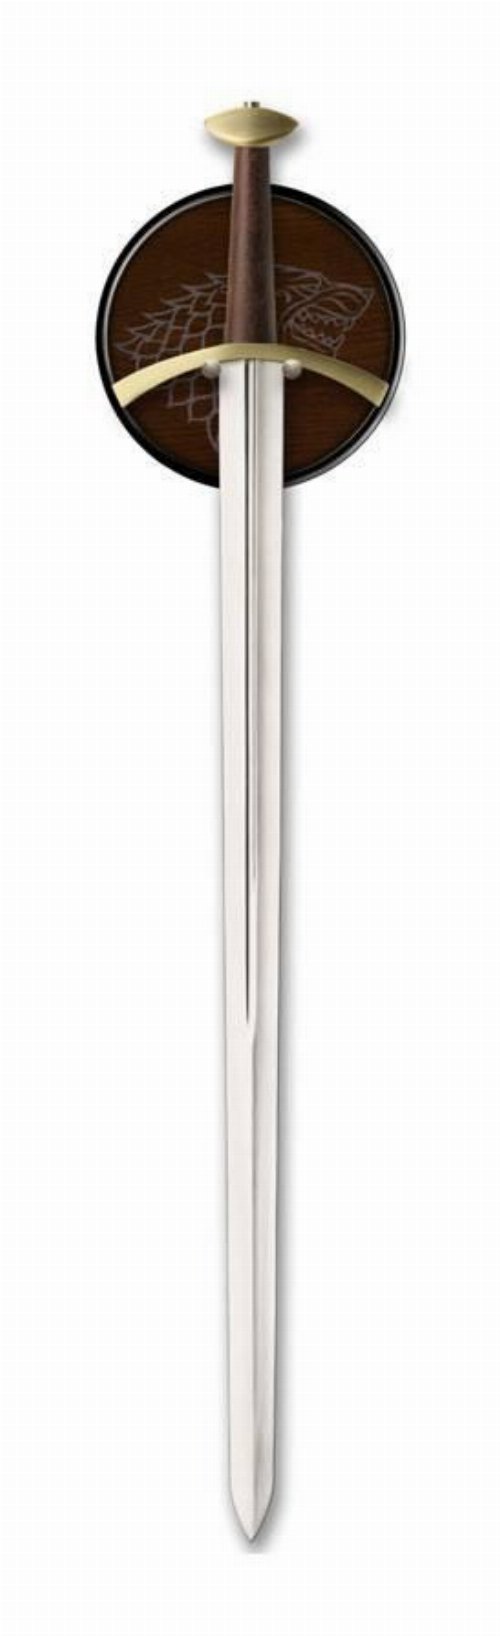 Game of Thrones - Robb Stark's Sword 1/1 Scale Replica
(104cm)